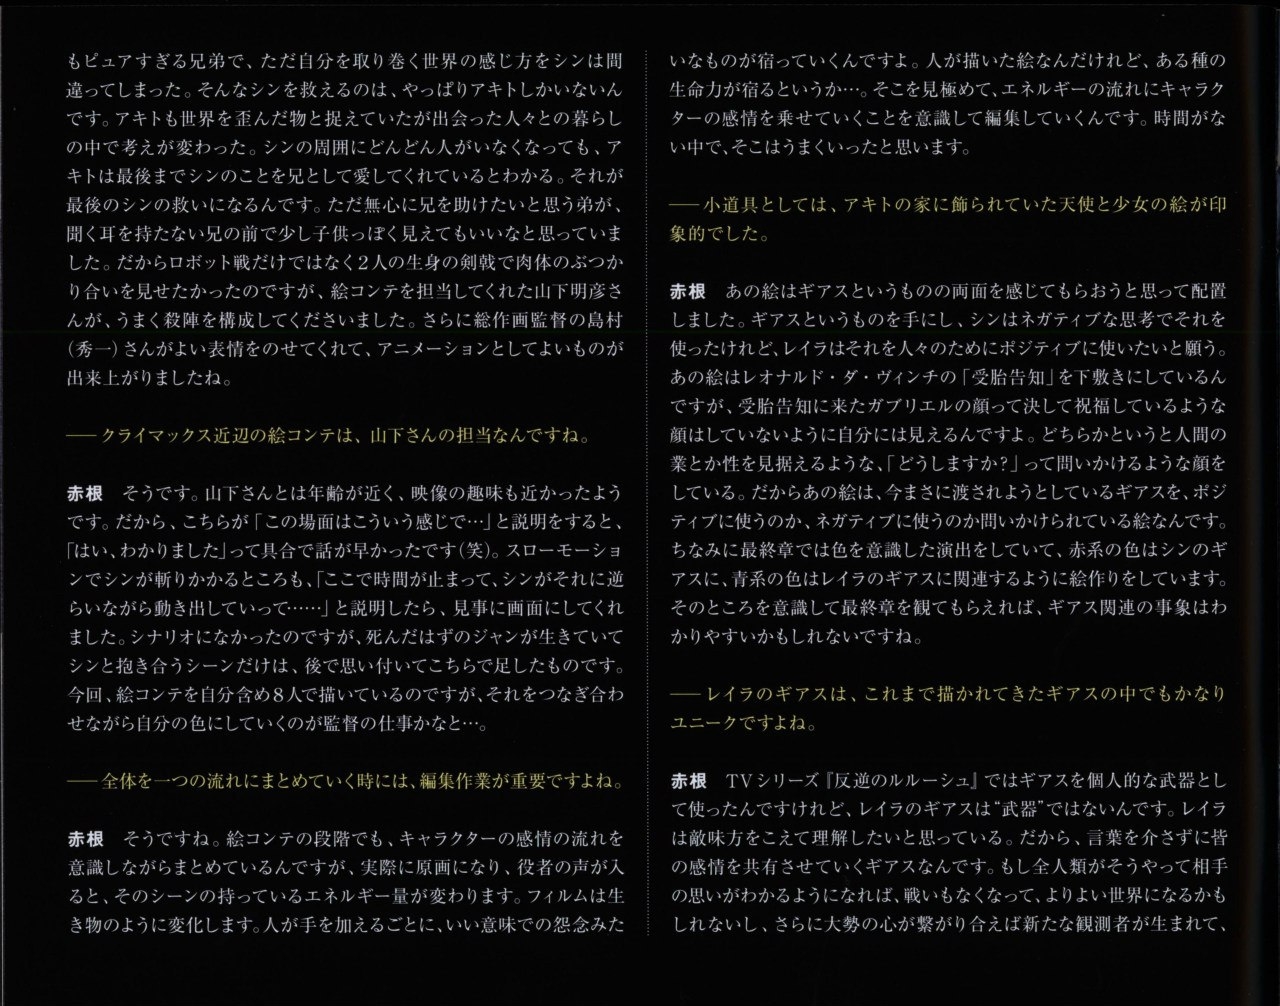 Code Geass - Akito the Exiled - Episode 5 Guidebook 19